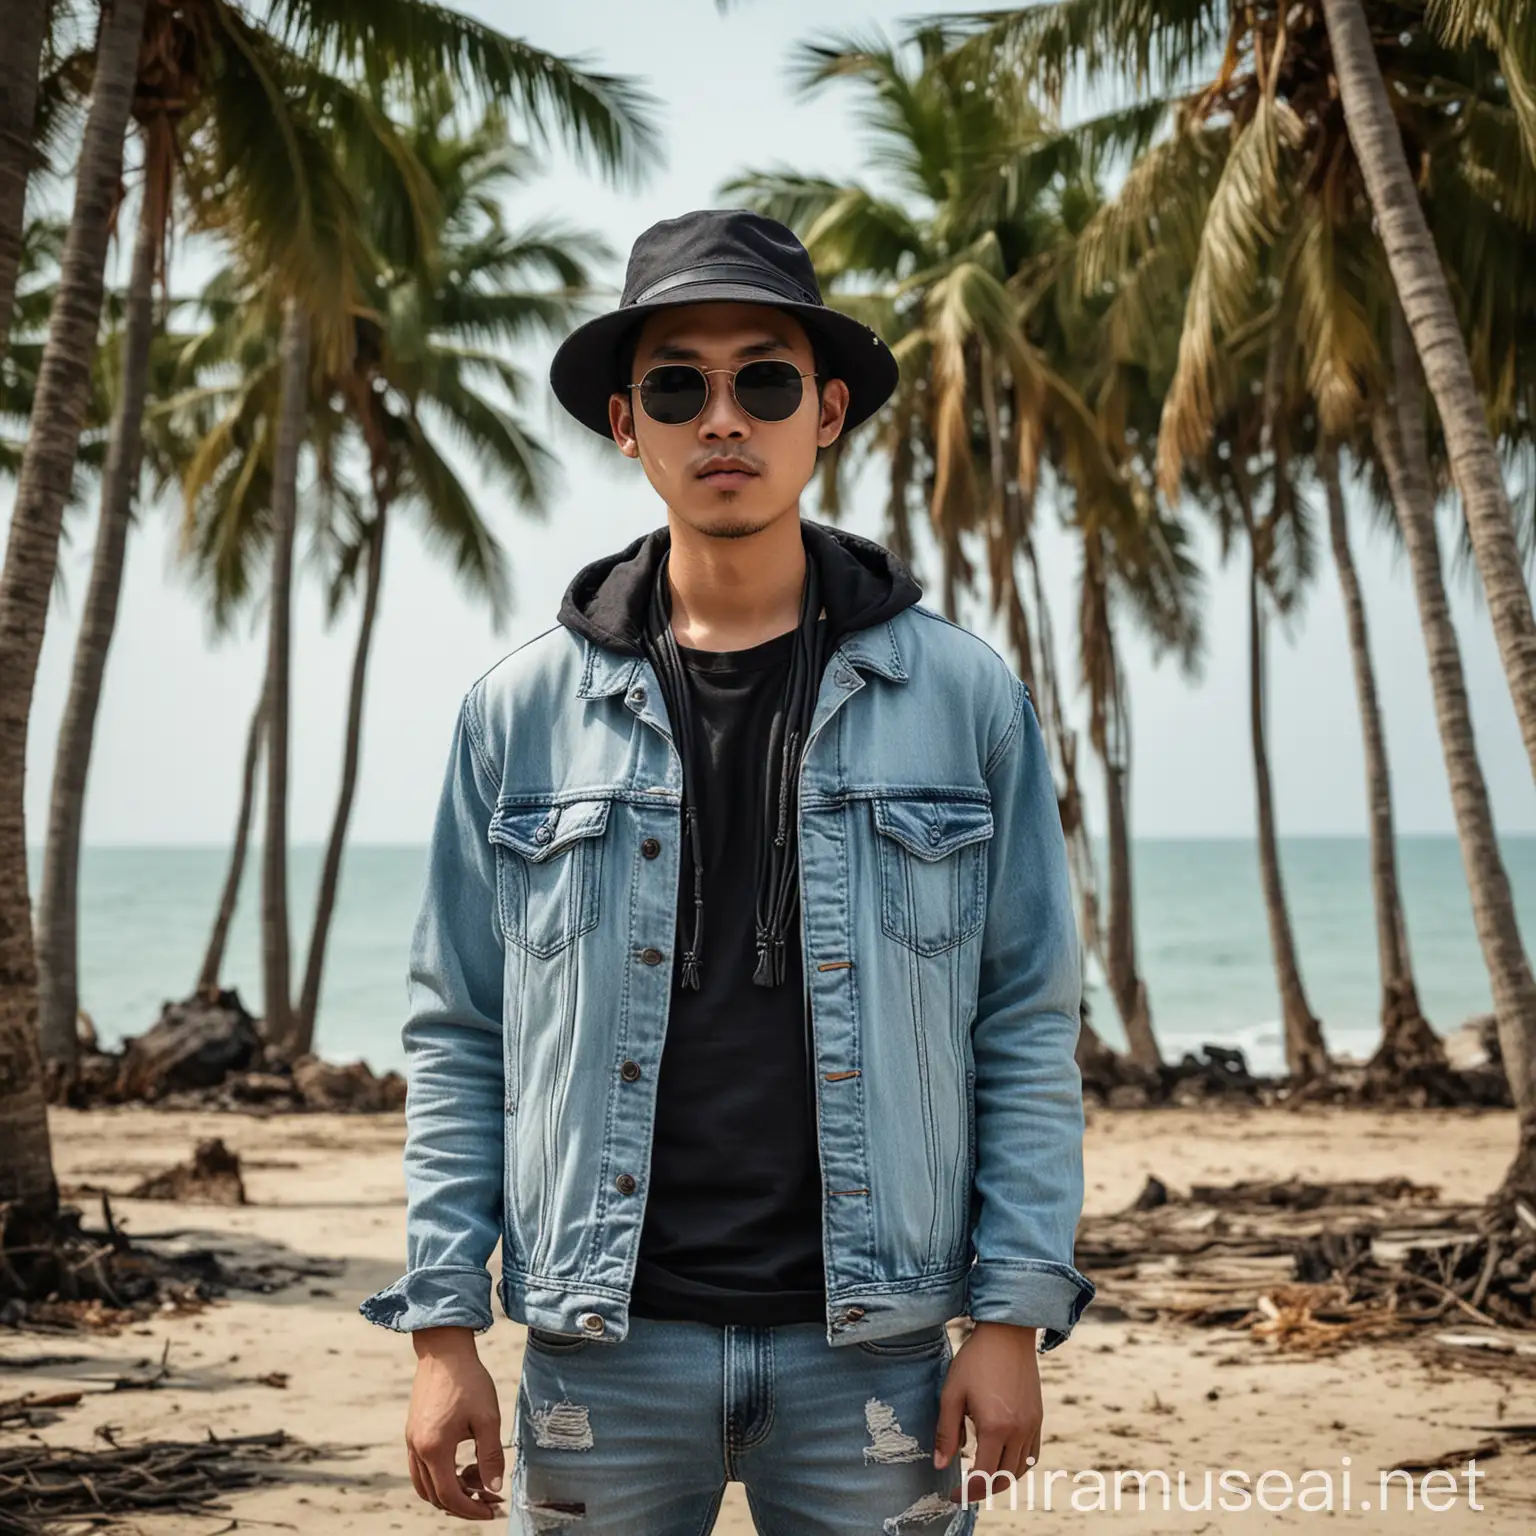 Hasil camera Nikon: seorang lelaki asia memakai bucket hitam, kaca mata loci hitam, jaket jeans biru muda model sobek dan celana jeans sedang berdiri tepi pantai ada pohon kelapa di siang hari ,dan sangat detail, sangat jernih, resolusi tinggi.